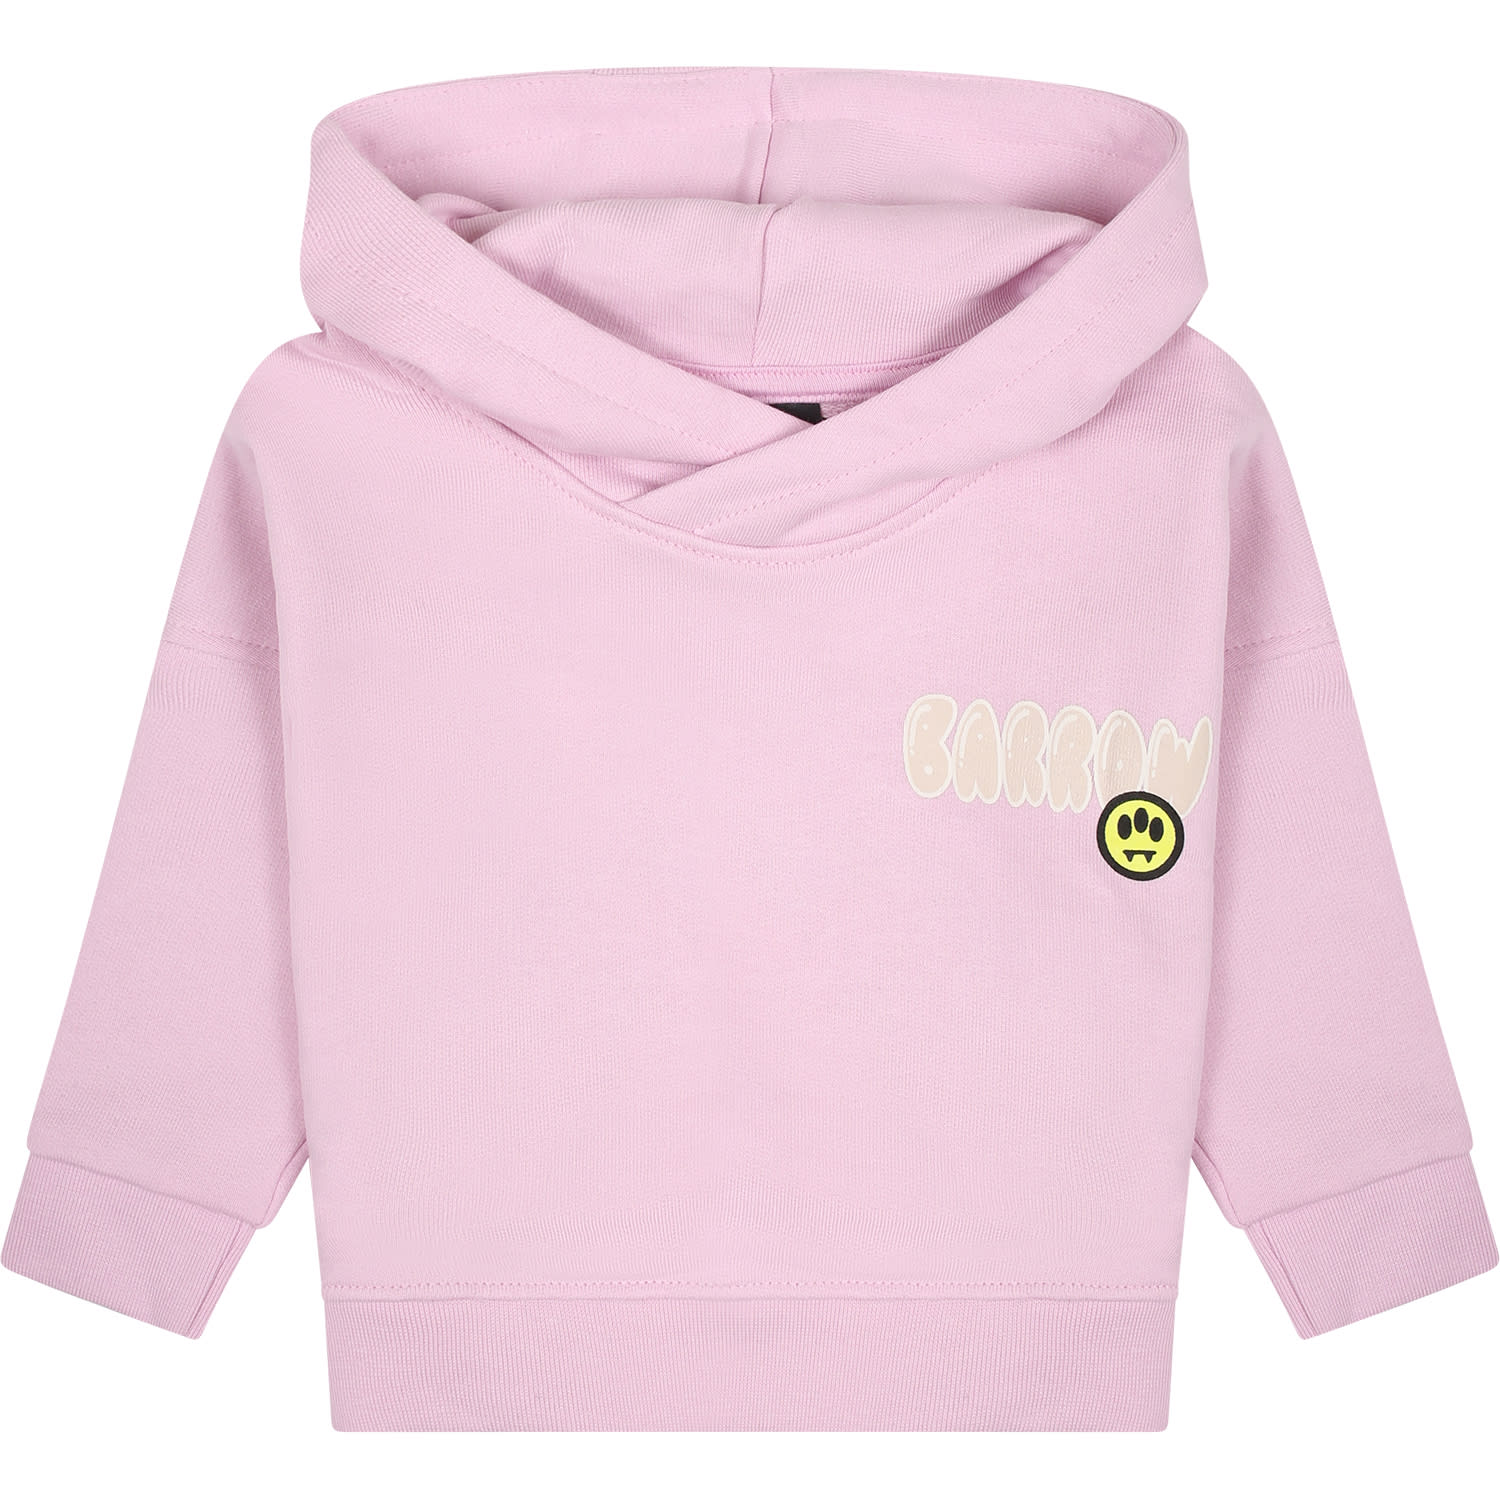 Shop Barrow Pink Sweatshirt For Baby Girl With Logo And Bear